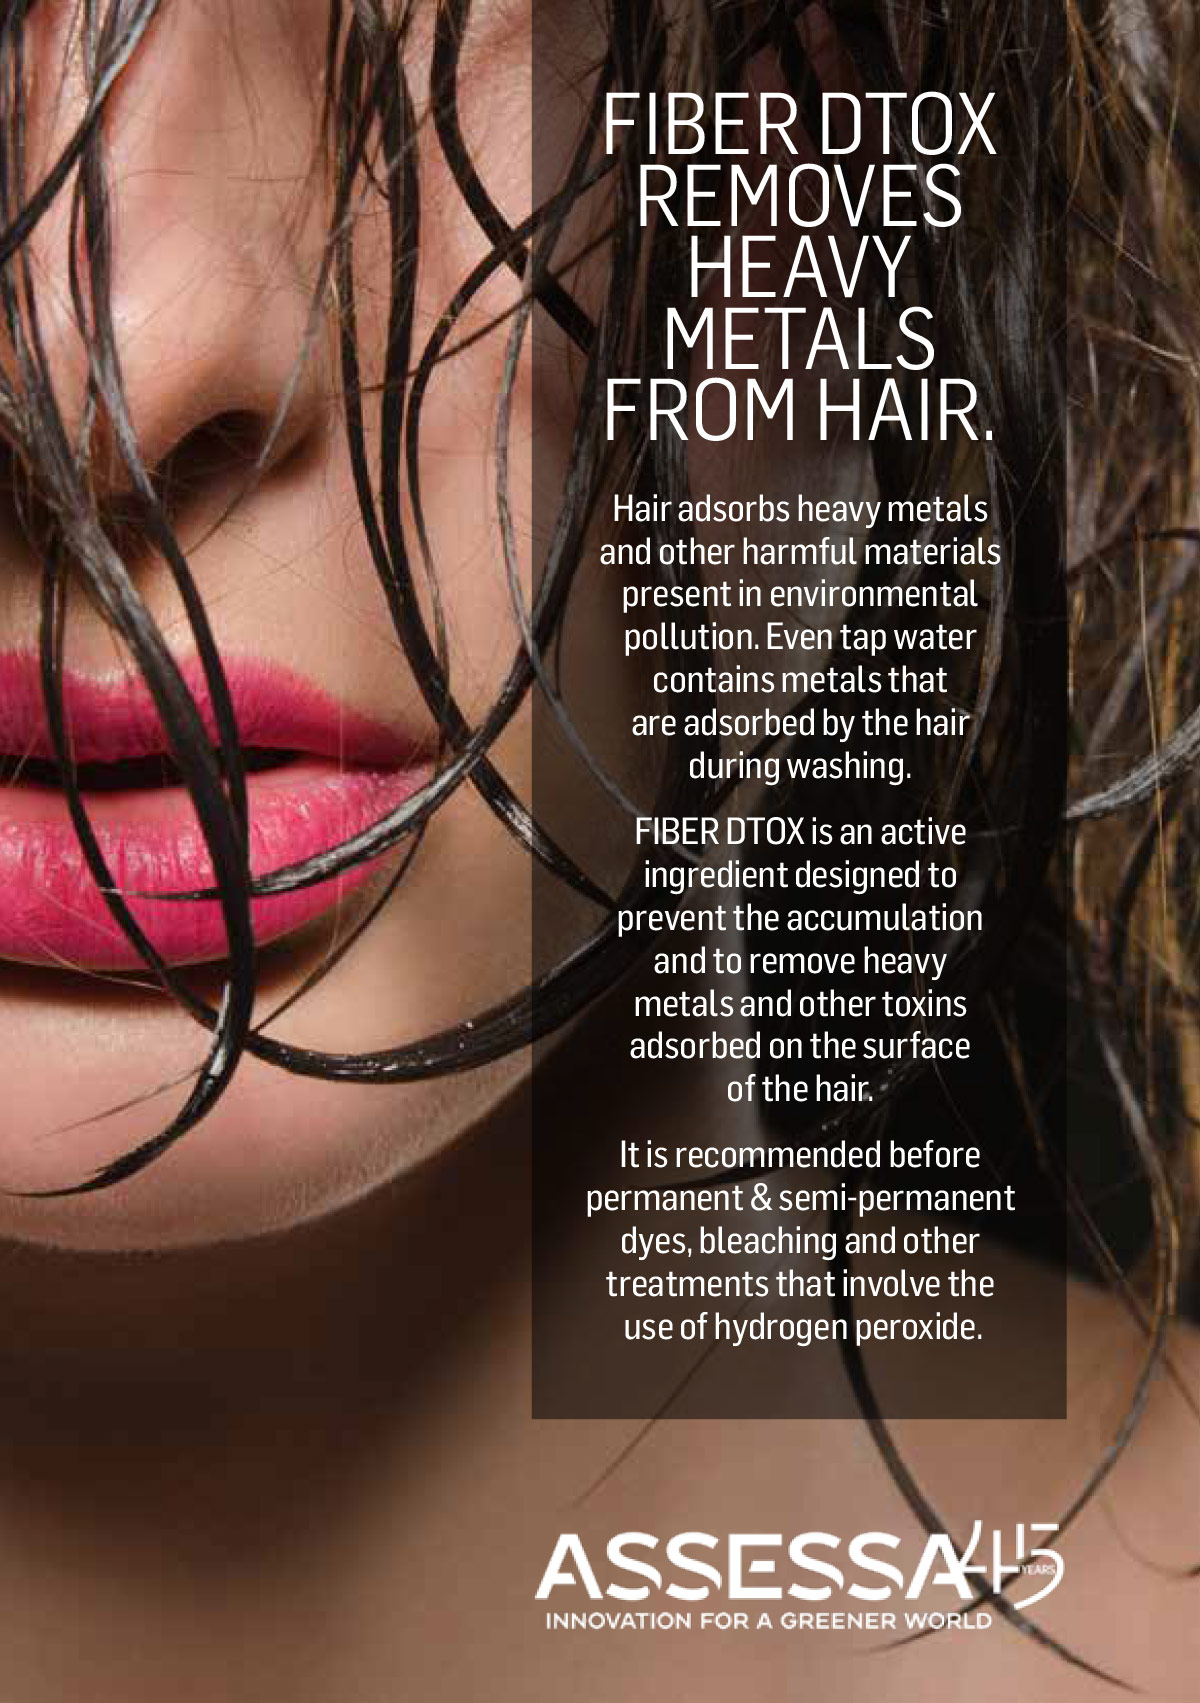 FIBER DTOX removes heavy metals from hair - Assessa